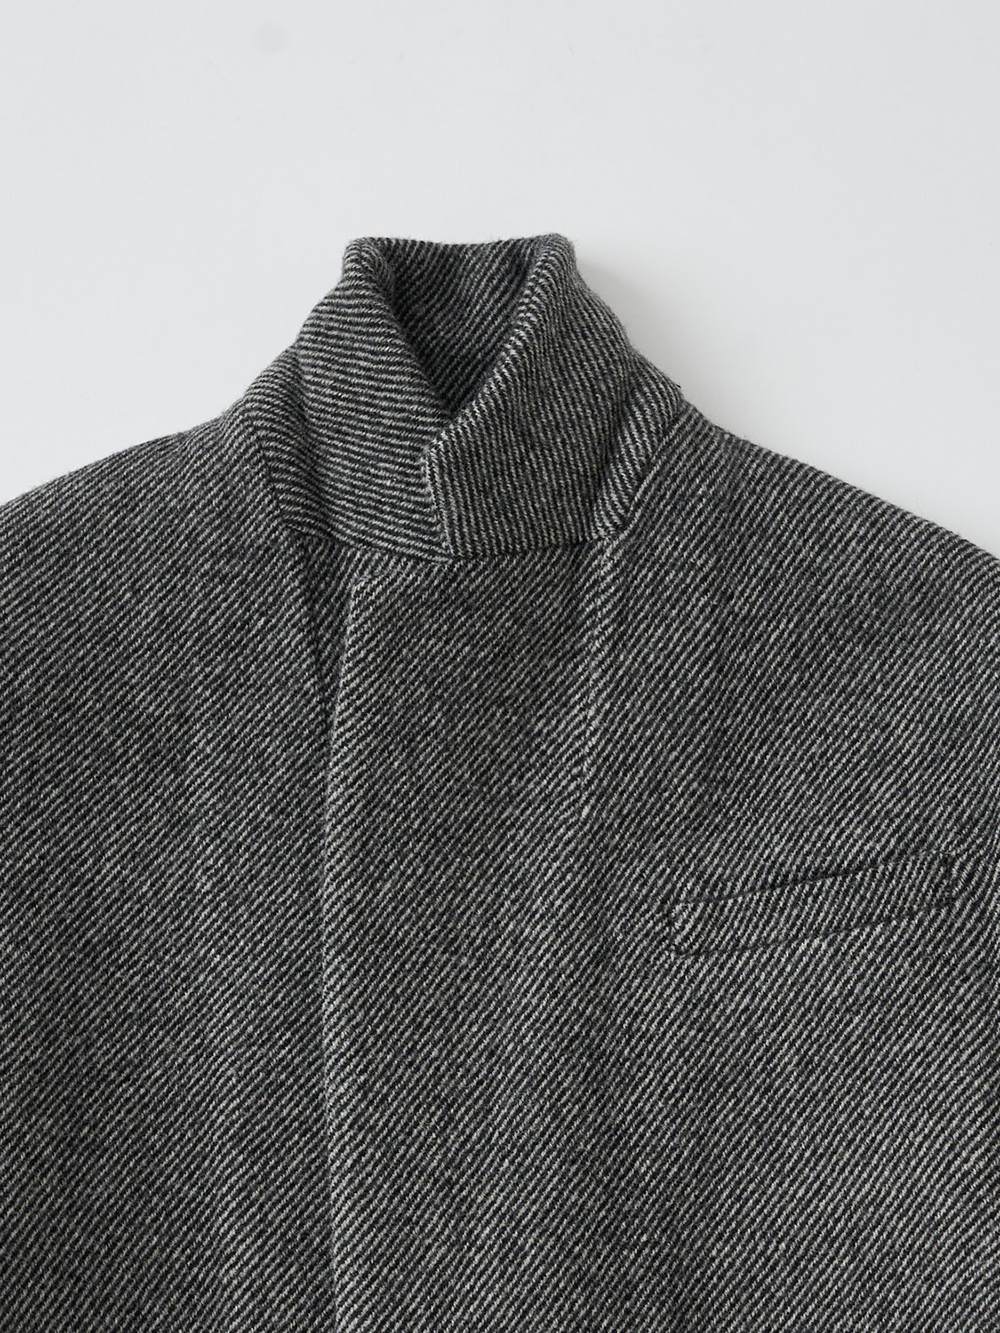 KIJI _ リバージャケットコート / Gray | R1